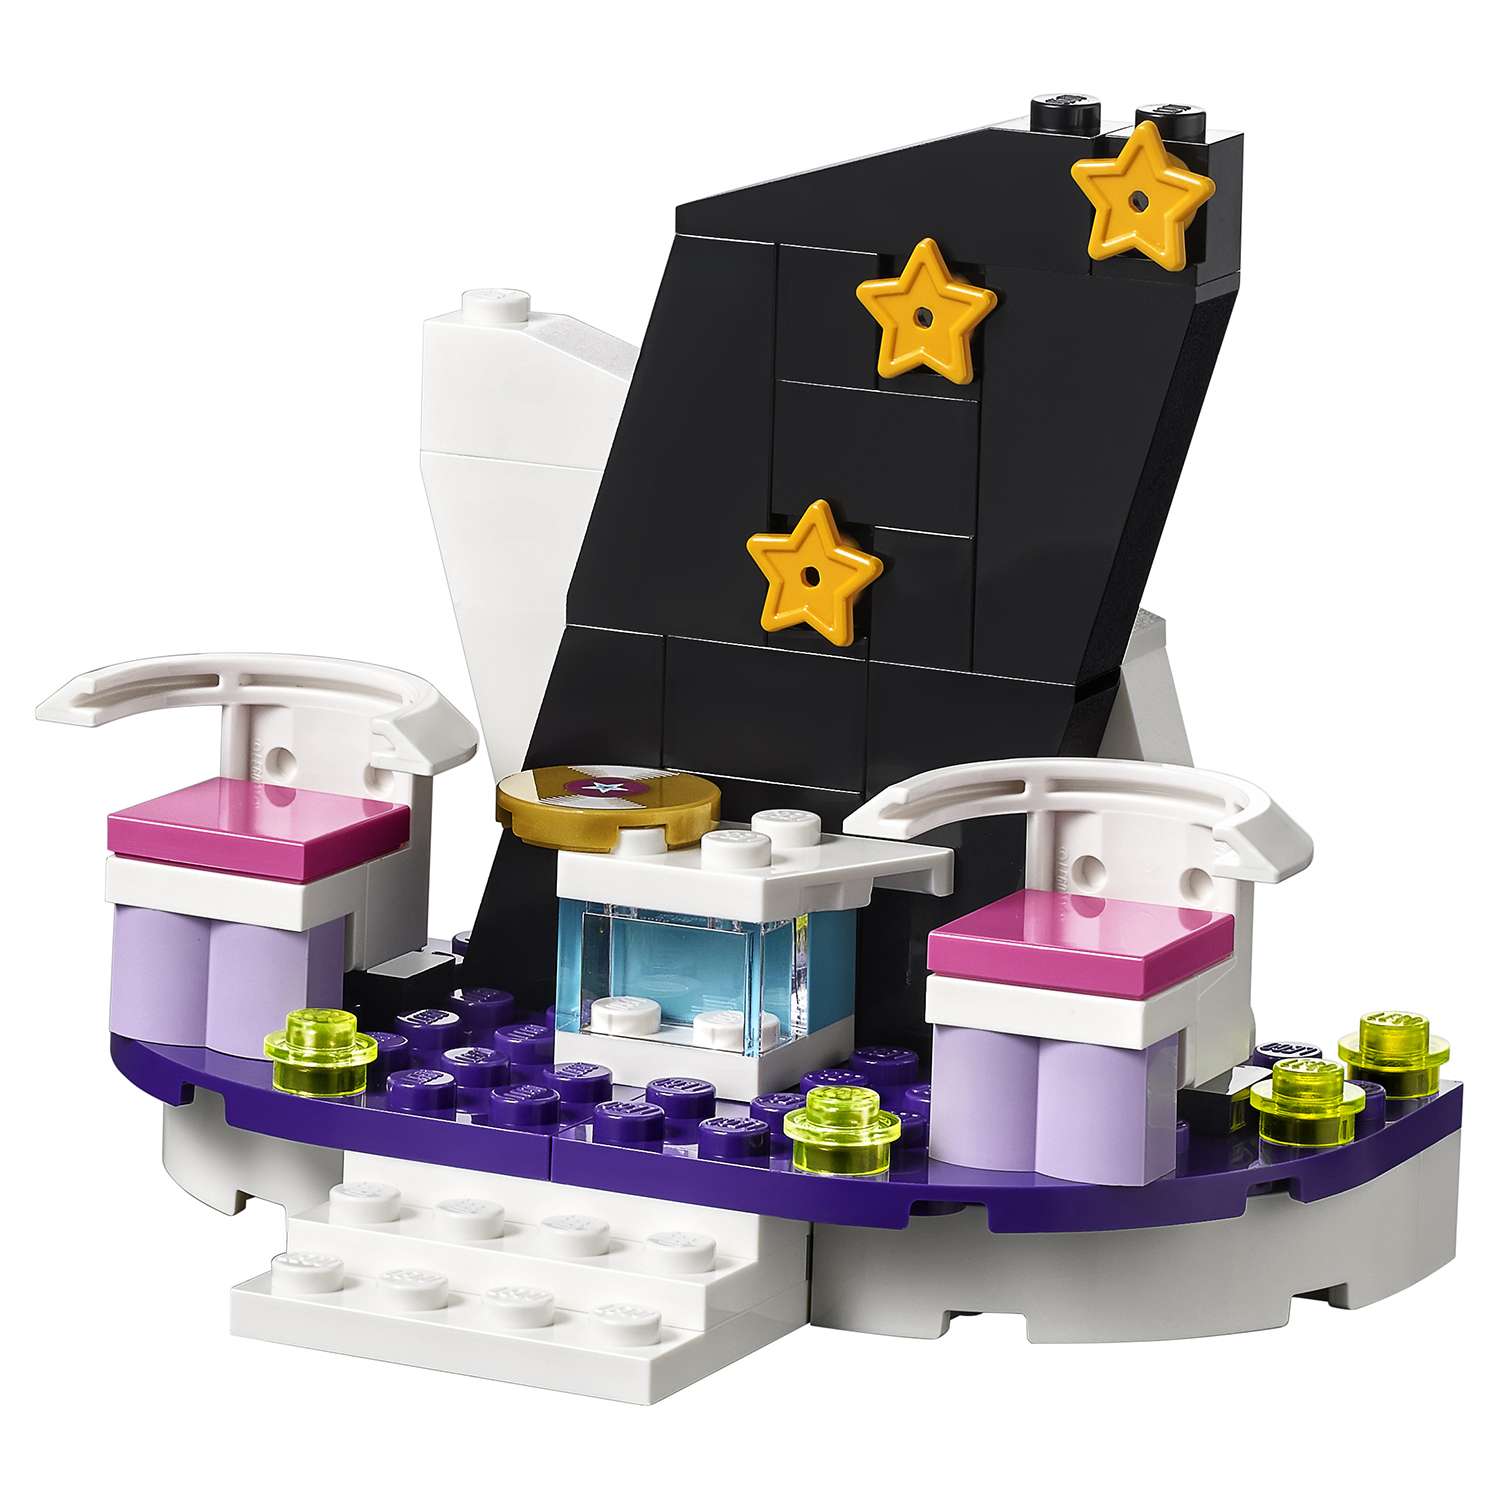 Конструктор LEGO Friends Поп звезда: лимузин (41107) - фото 9